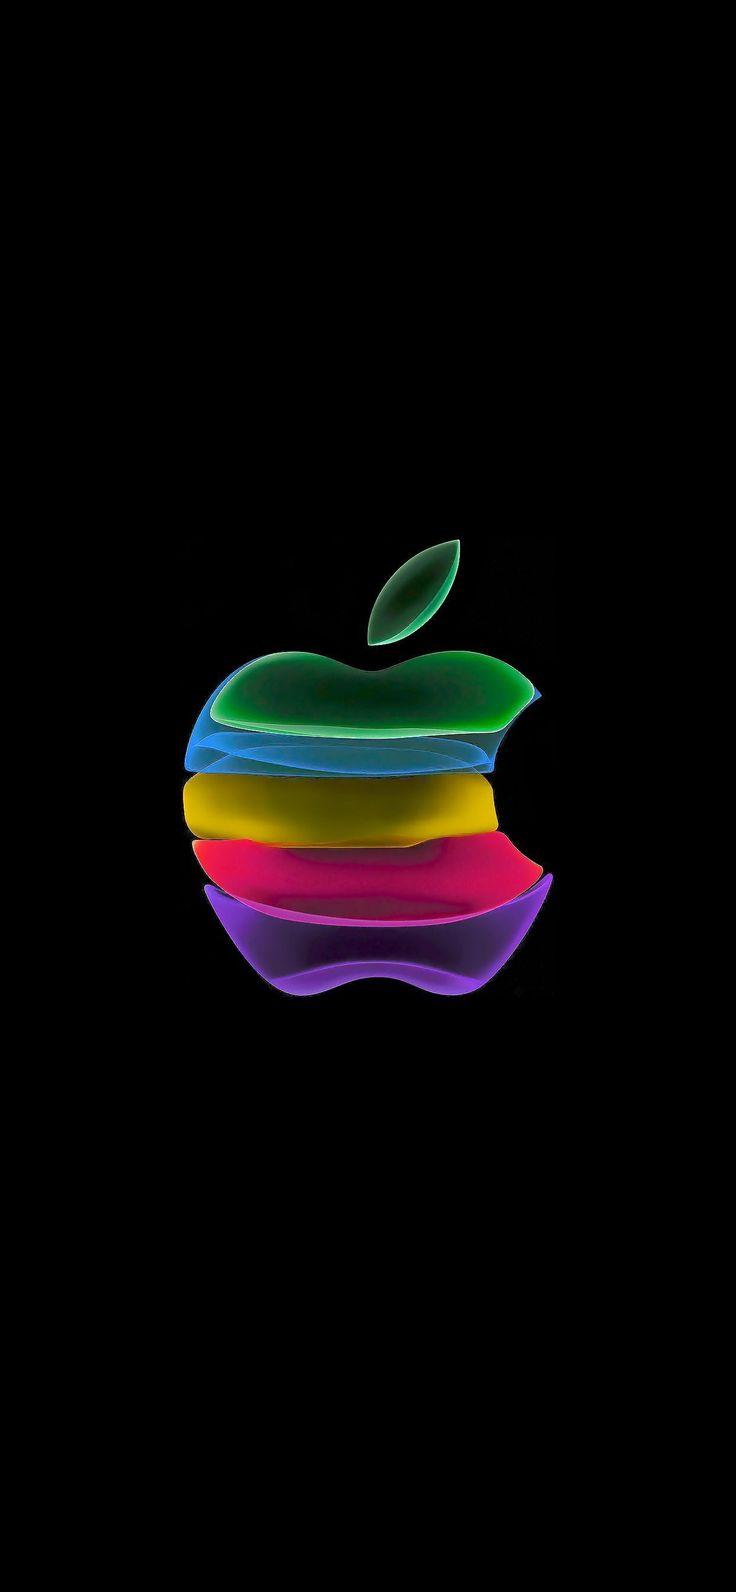 Original Apple Logo Wallpapers - Top Free Original Apple Logo ...